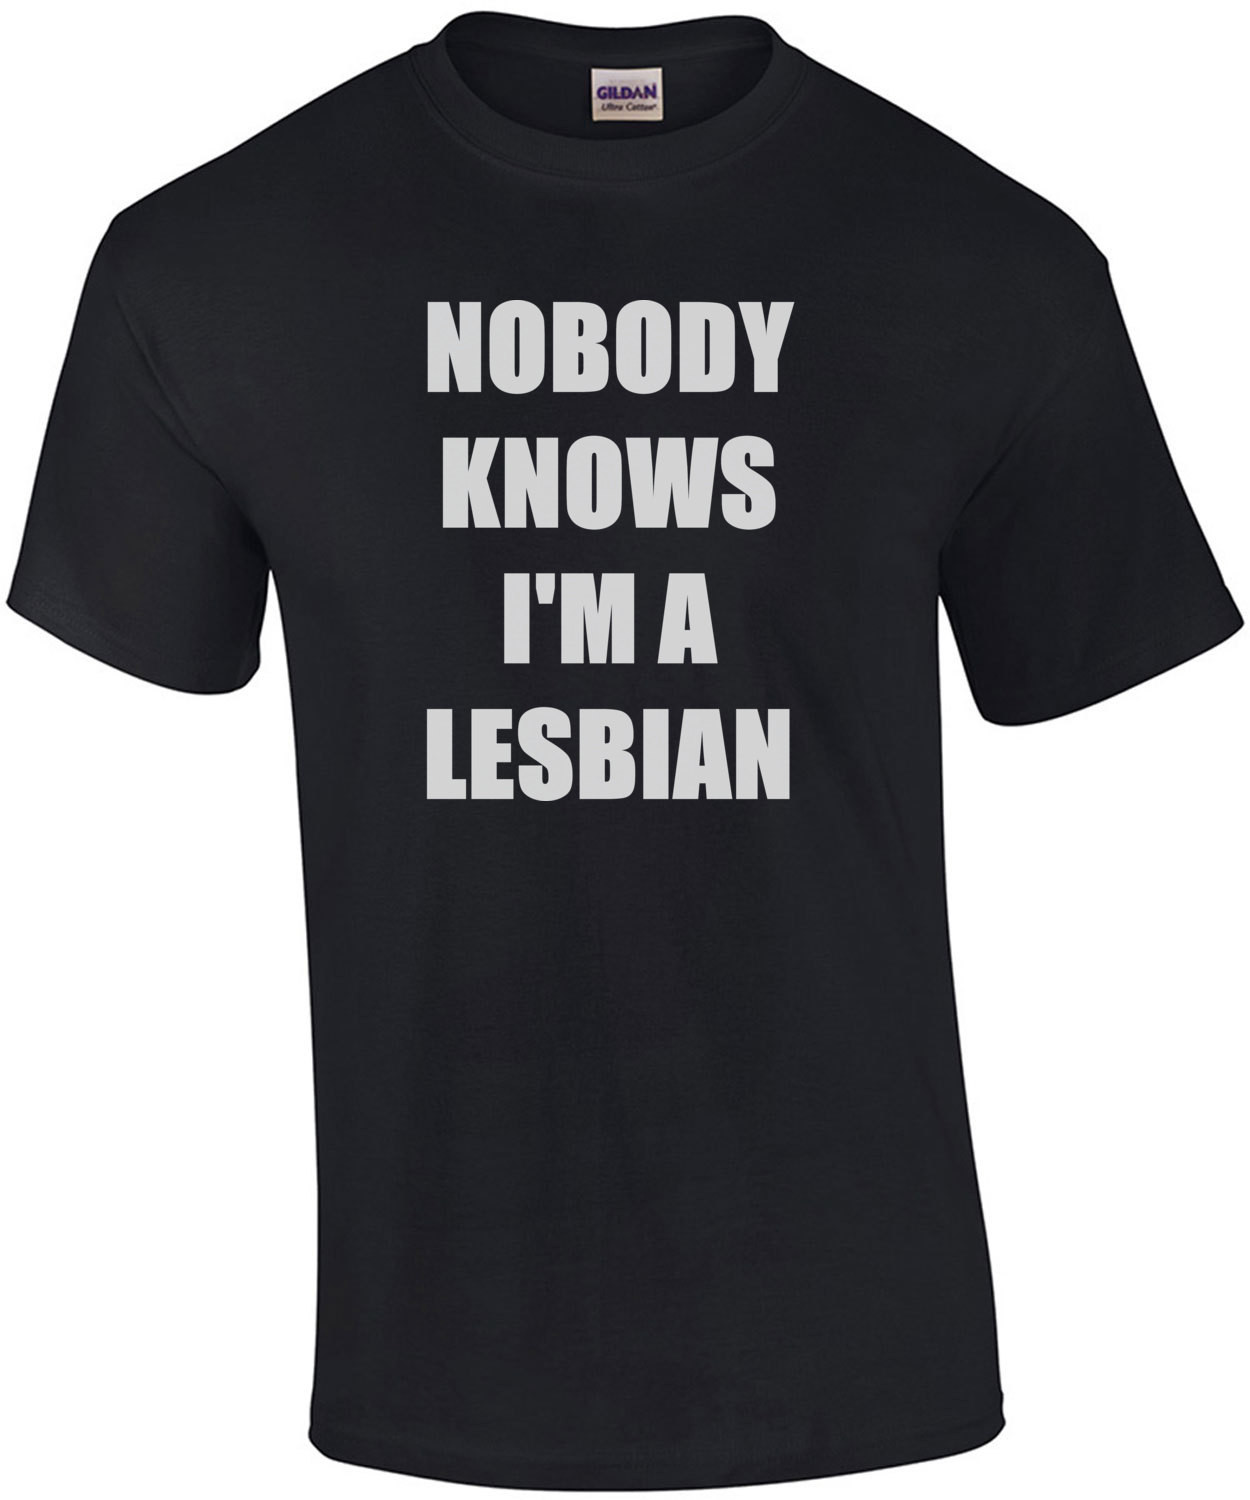 Nobody knows I'm a lesbian - funny t-shirt